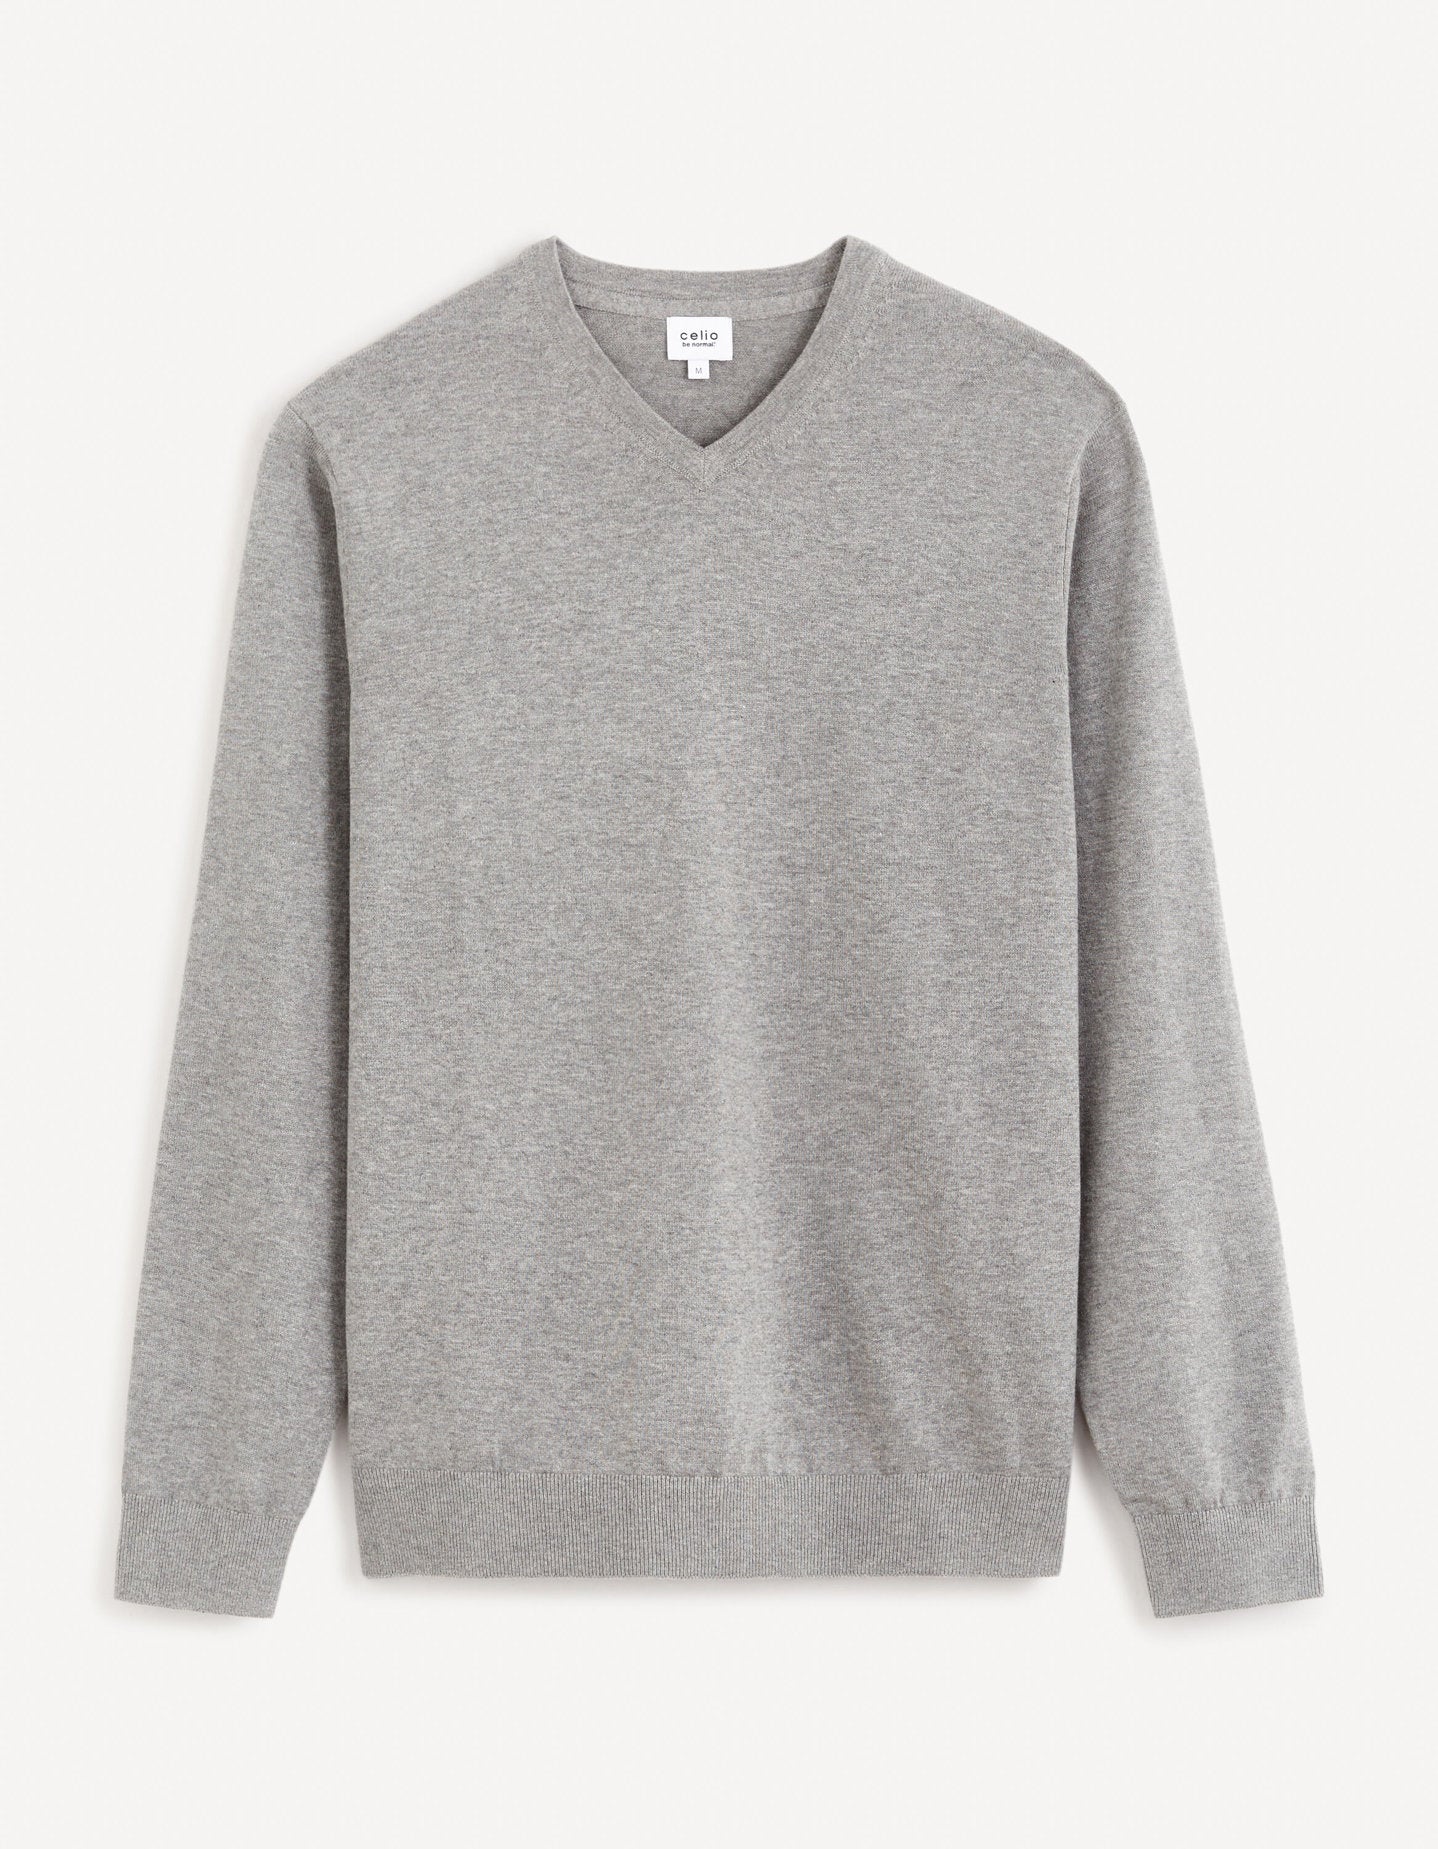 V-Neck Sweater 100% Cotton - Heather Grey_DECOTONV_GREY MEL_02